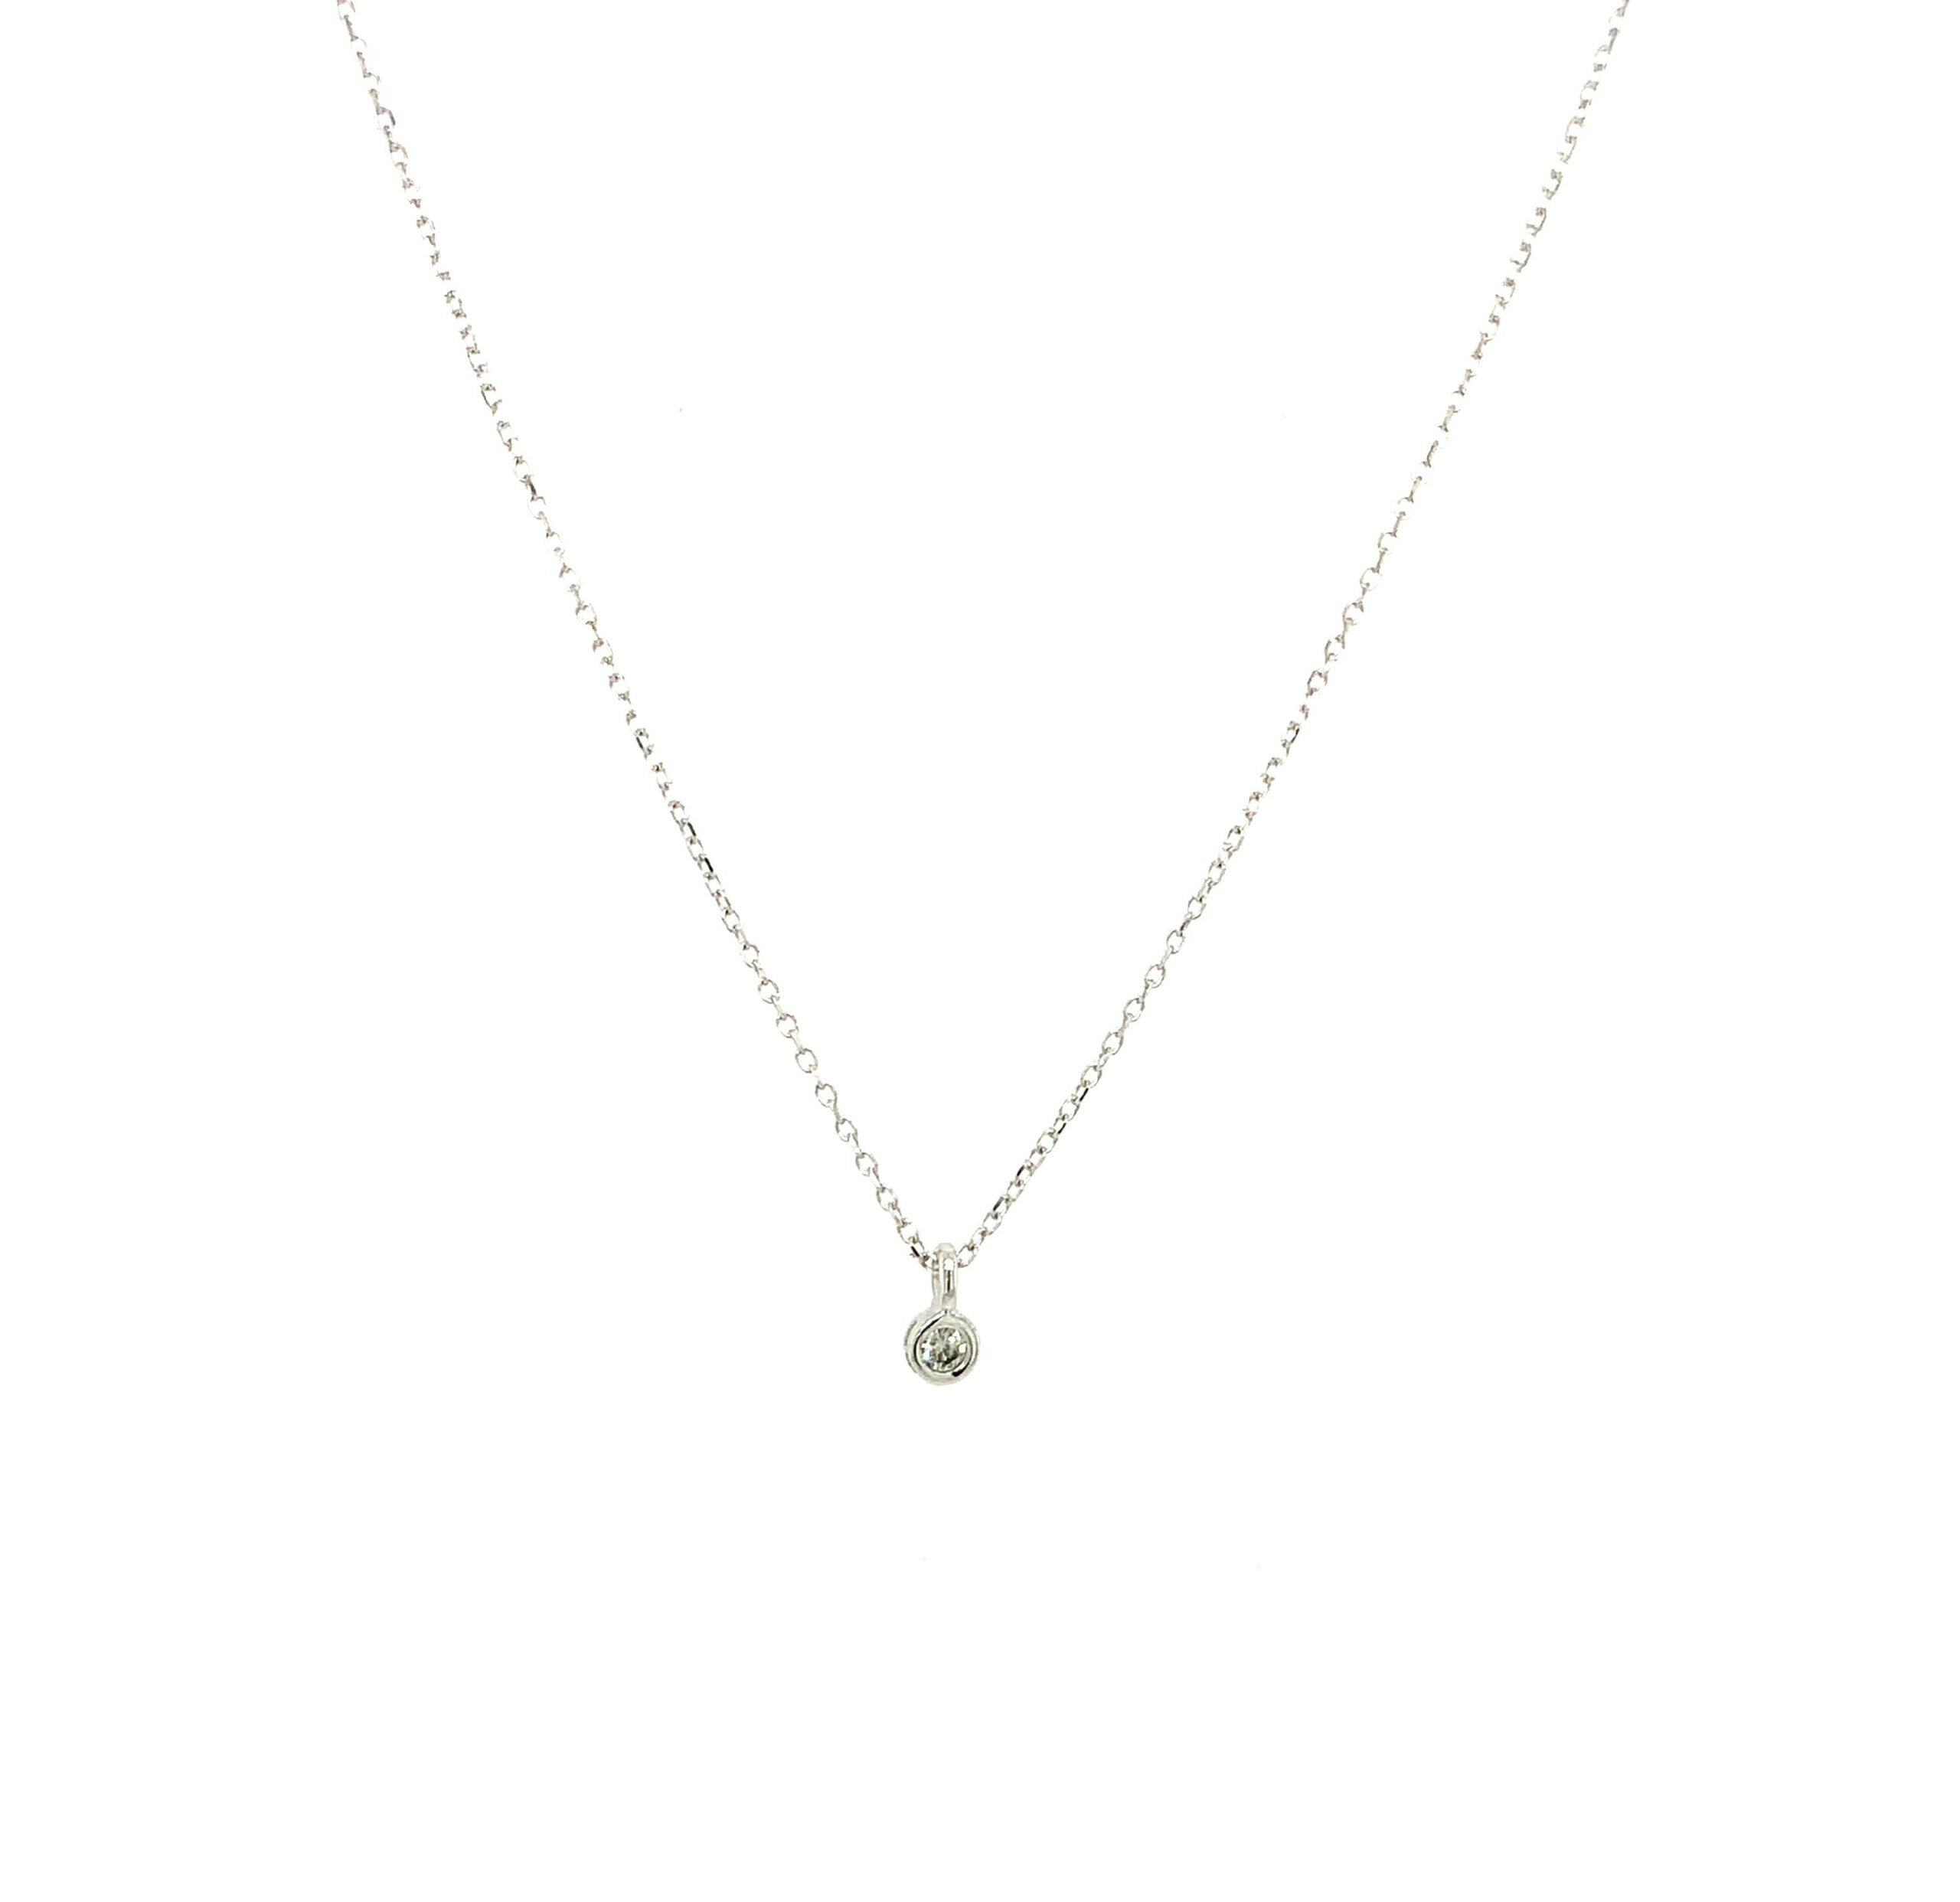 White Gold Bezel-Set Diamond Necklace